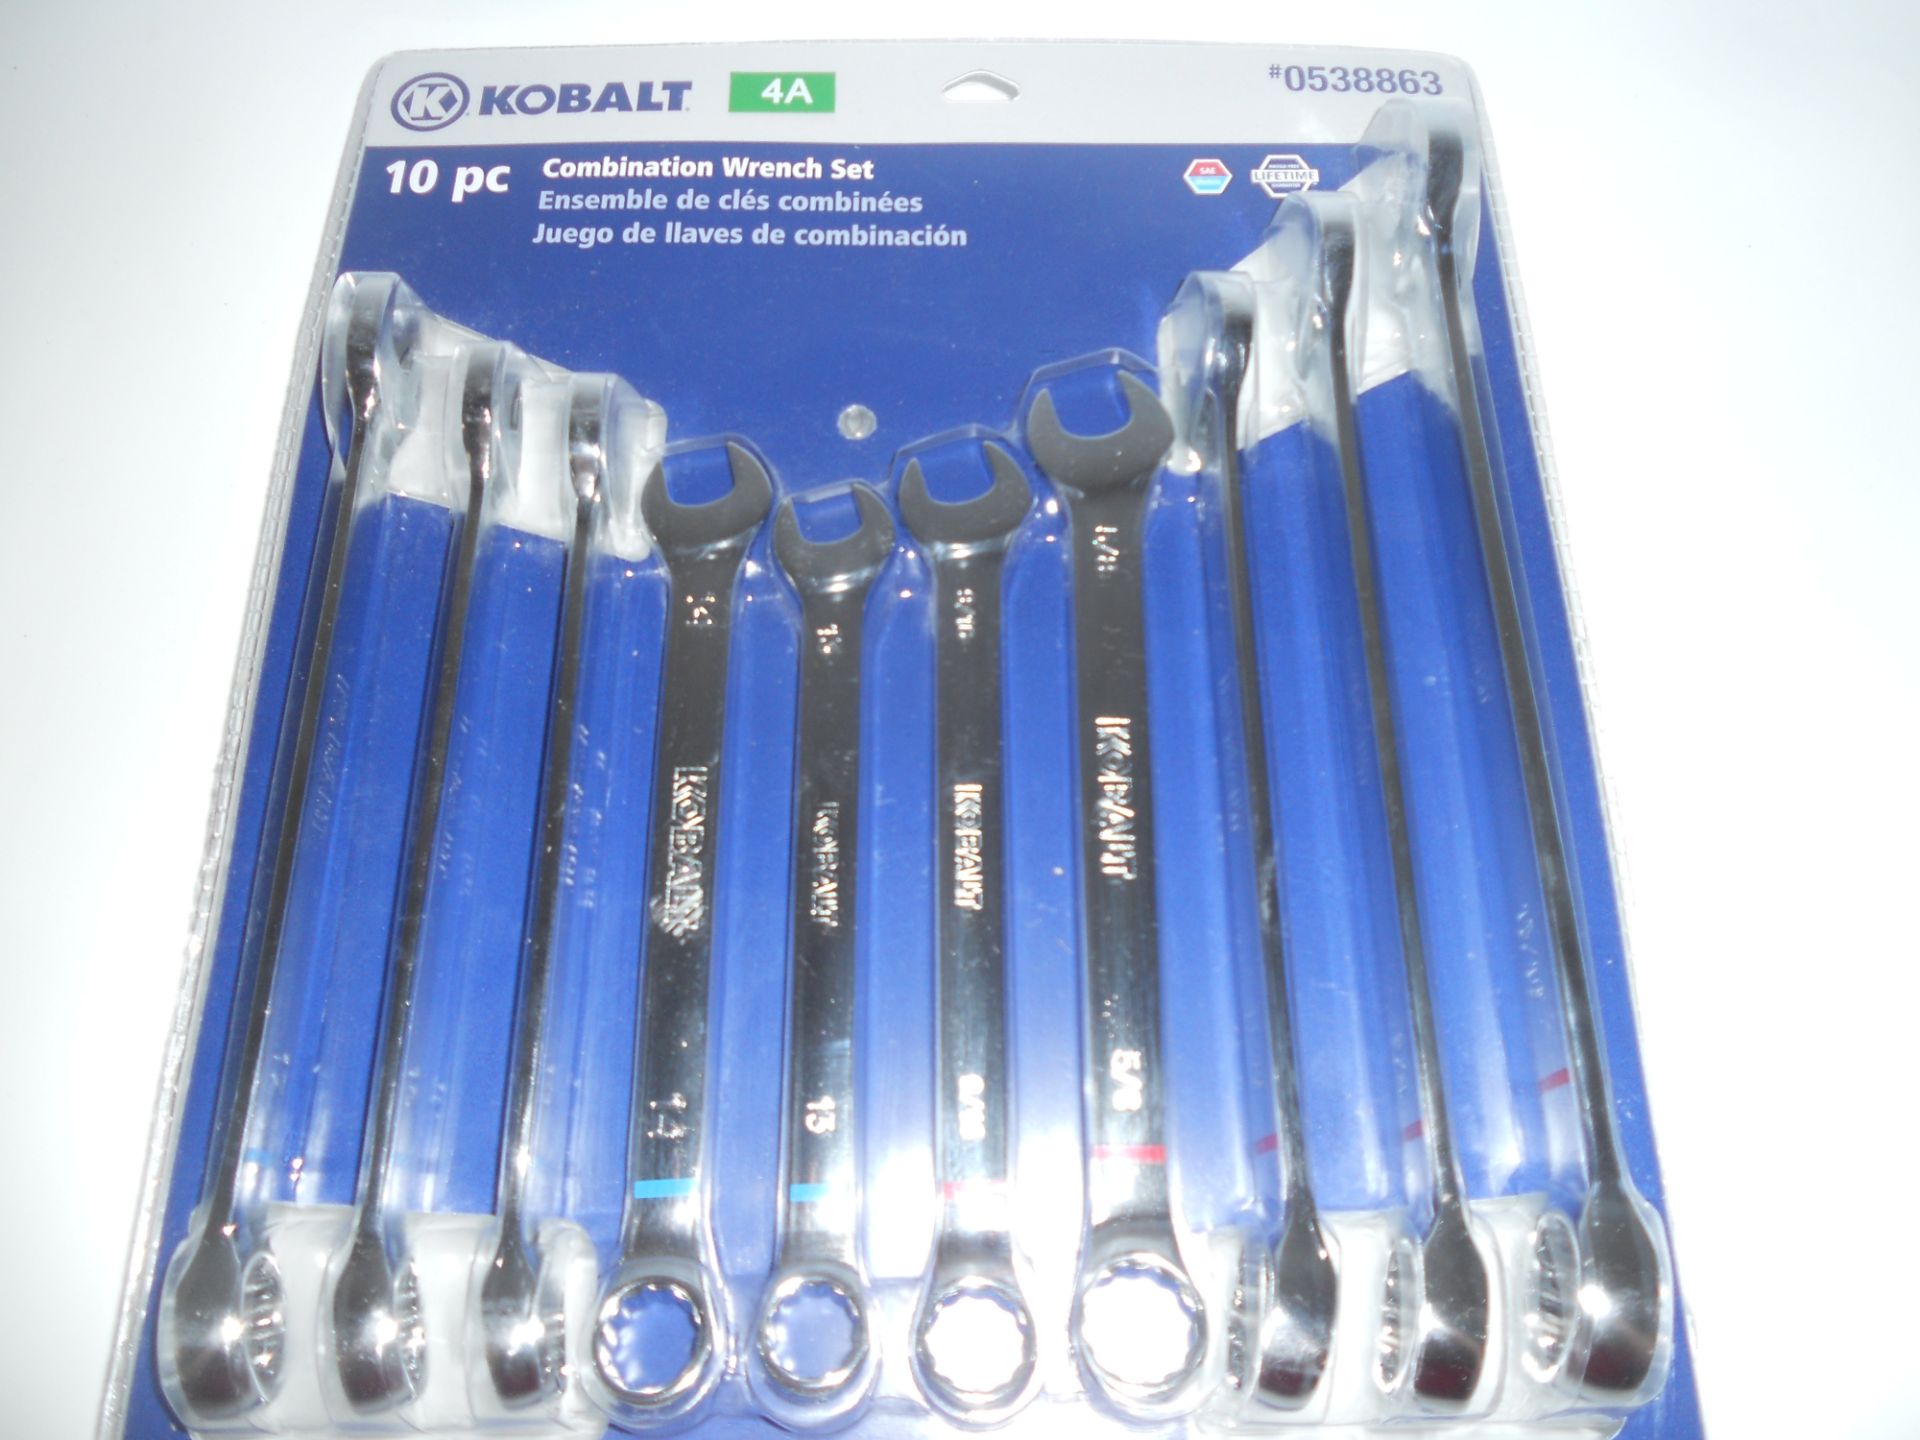 Kobalt 10-piece Combo SAE/Metric wrench set